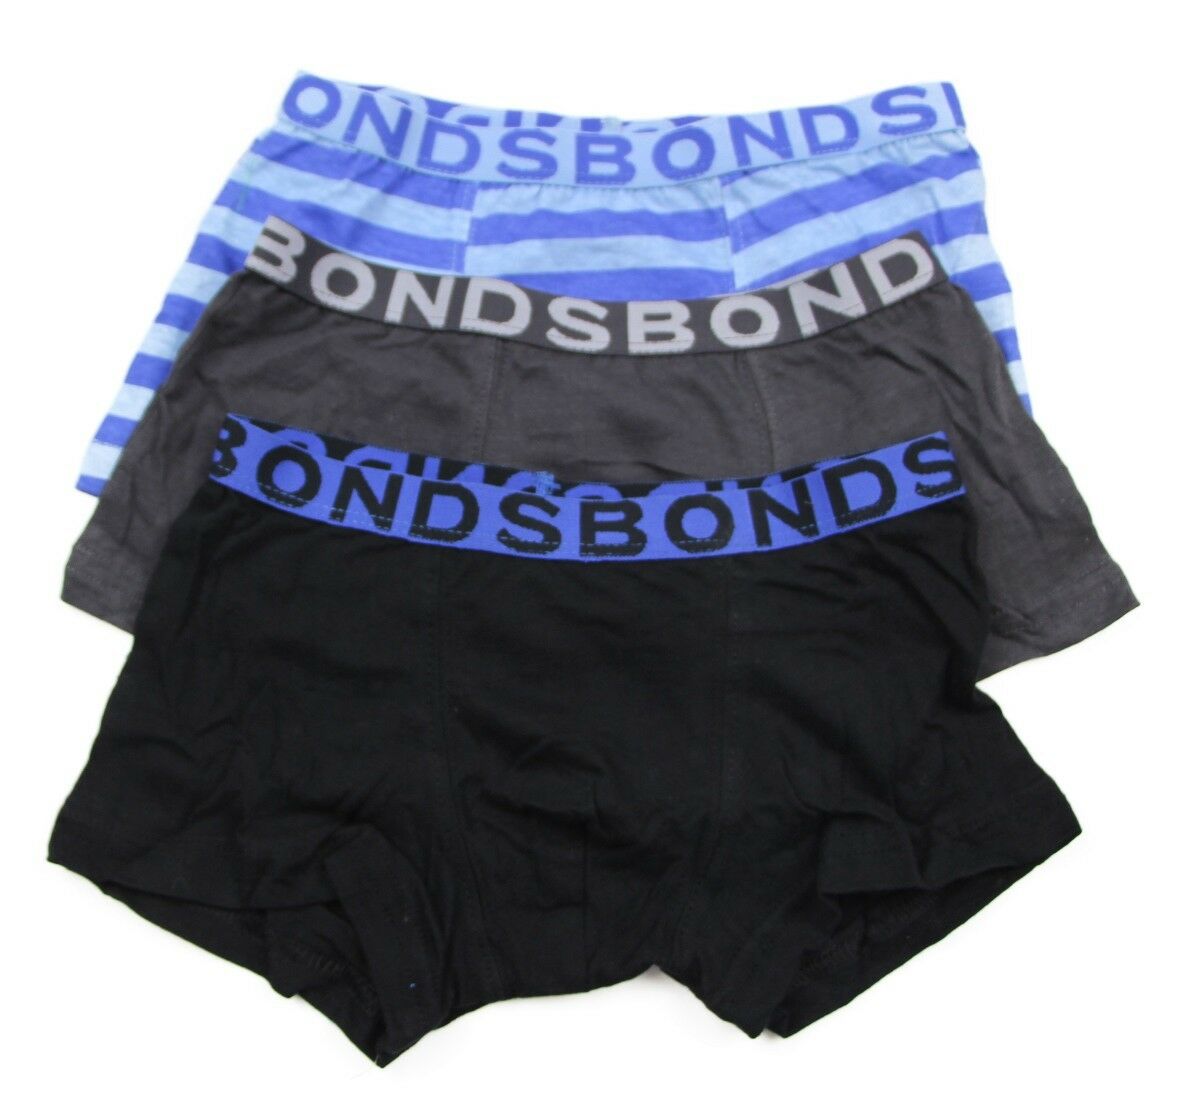 Boys Bonds Kids Underwear Bulk 9 Pairs Trunks Trunk Boyleg Boxer Shorts Multipack